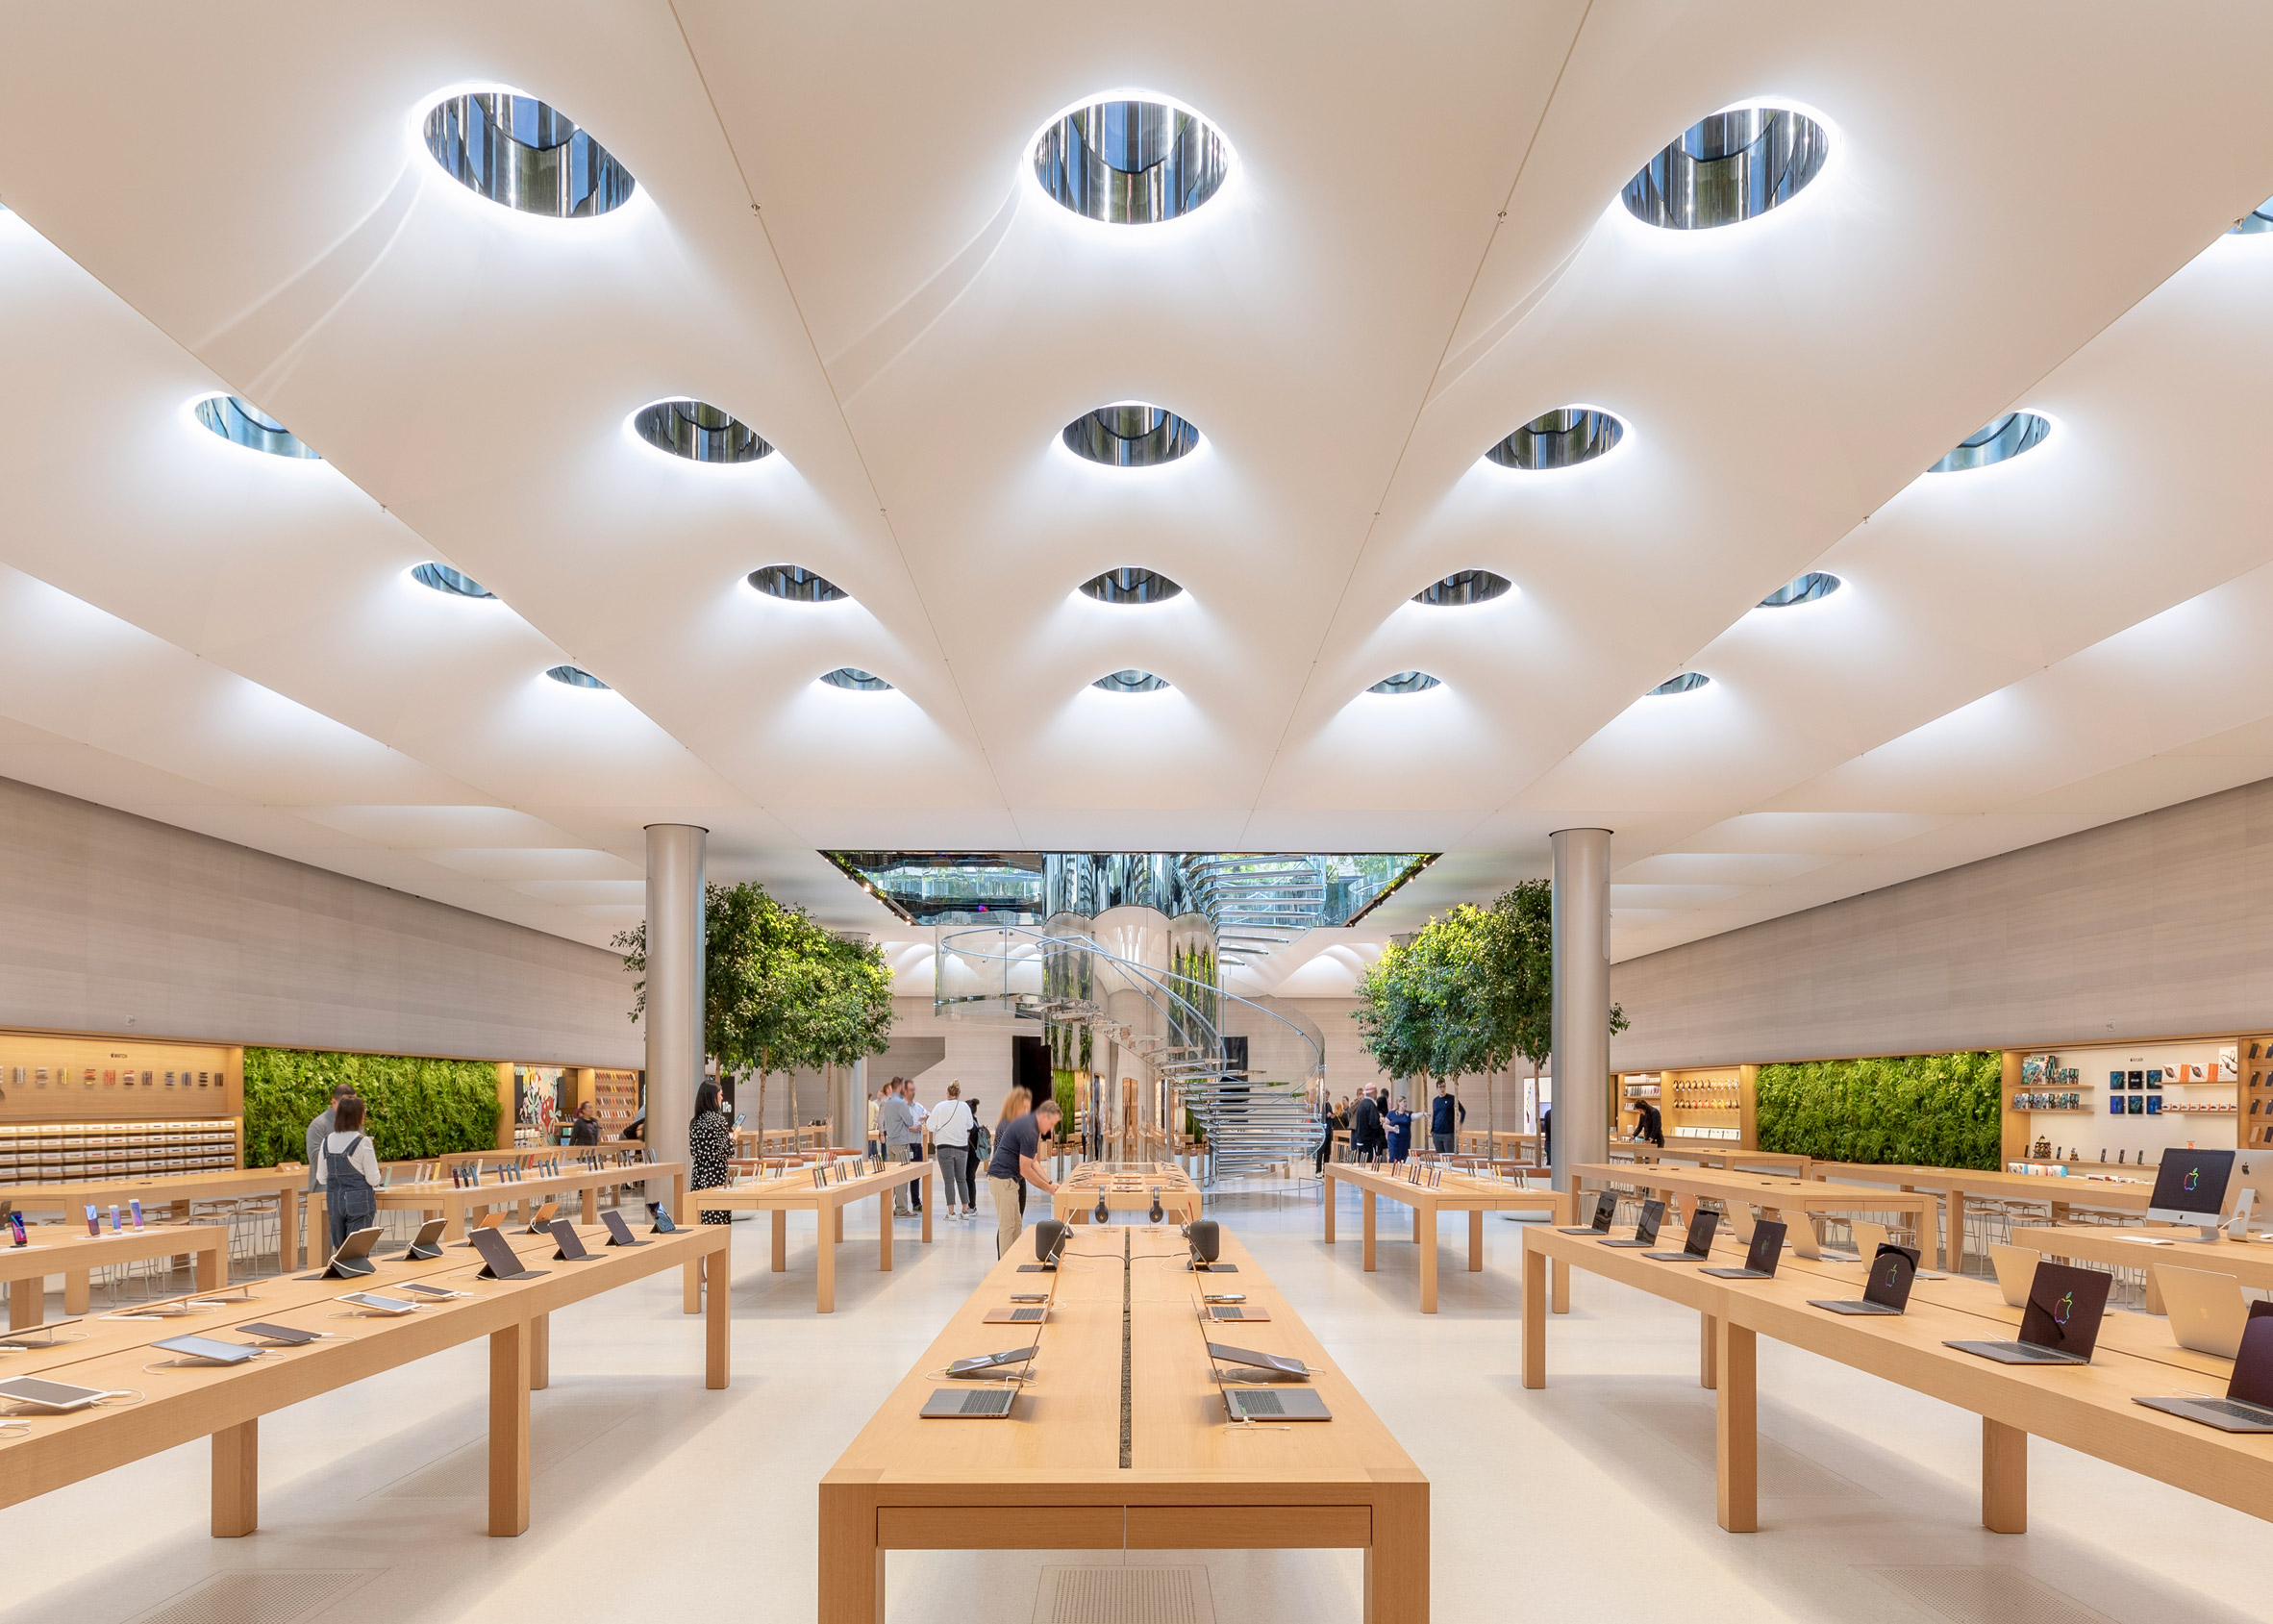 Design flaw in Apple flagship store - Spudart